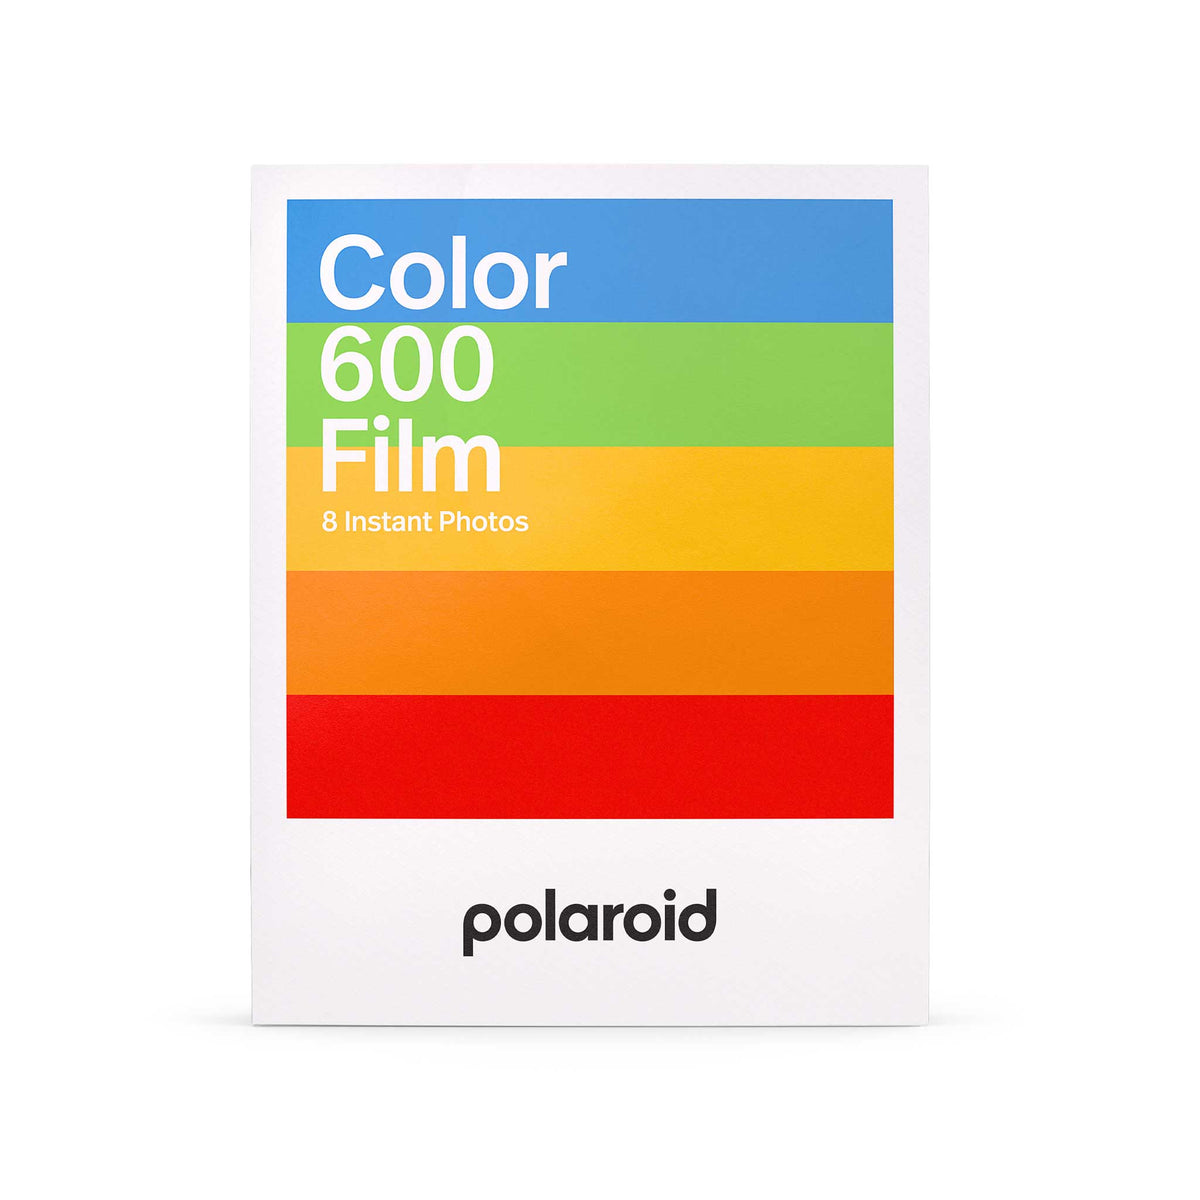 POLAROID 600 COLOR FILM – Safelight Berlin